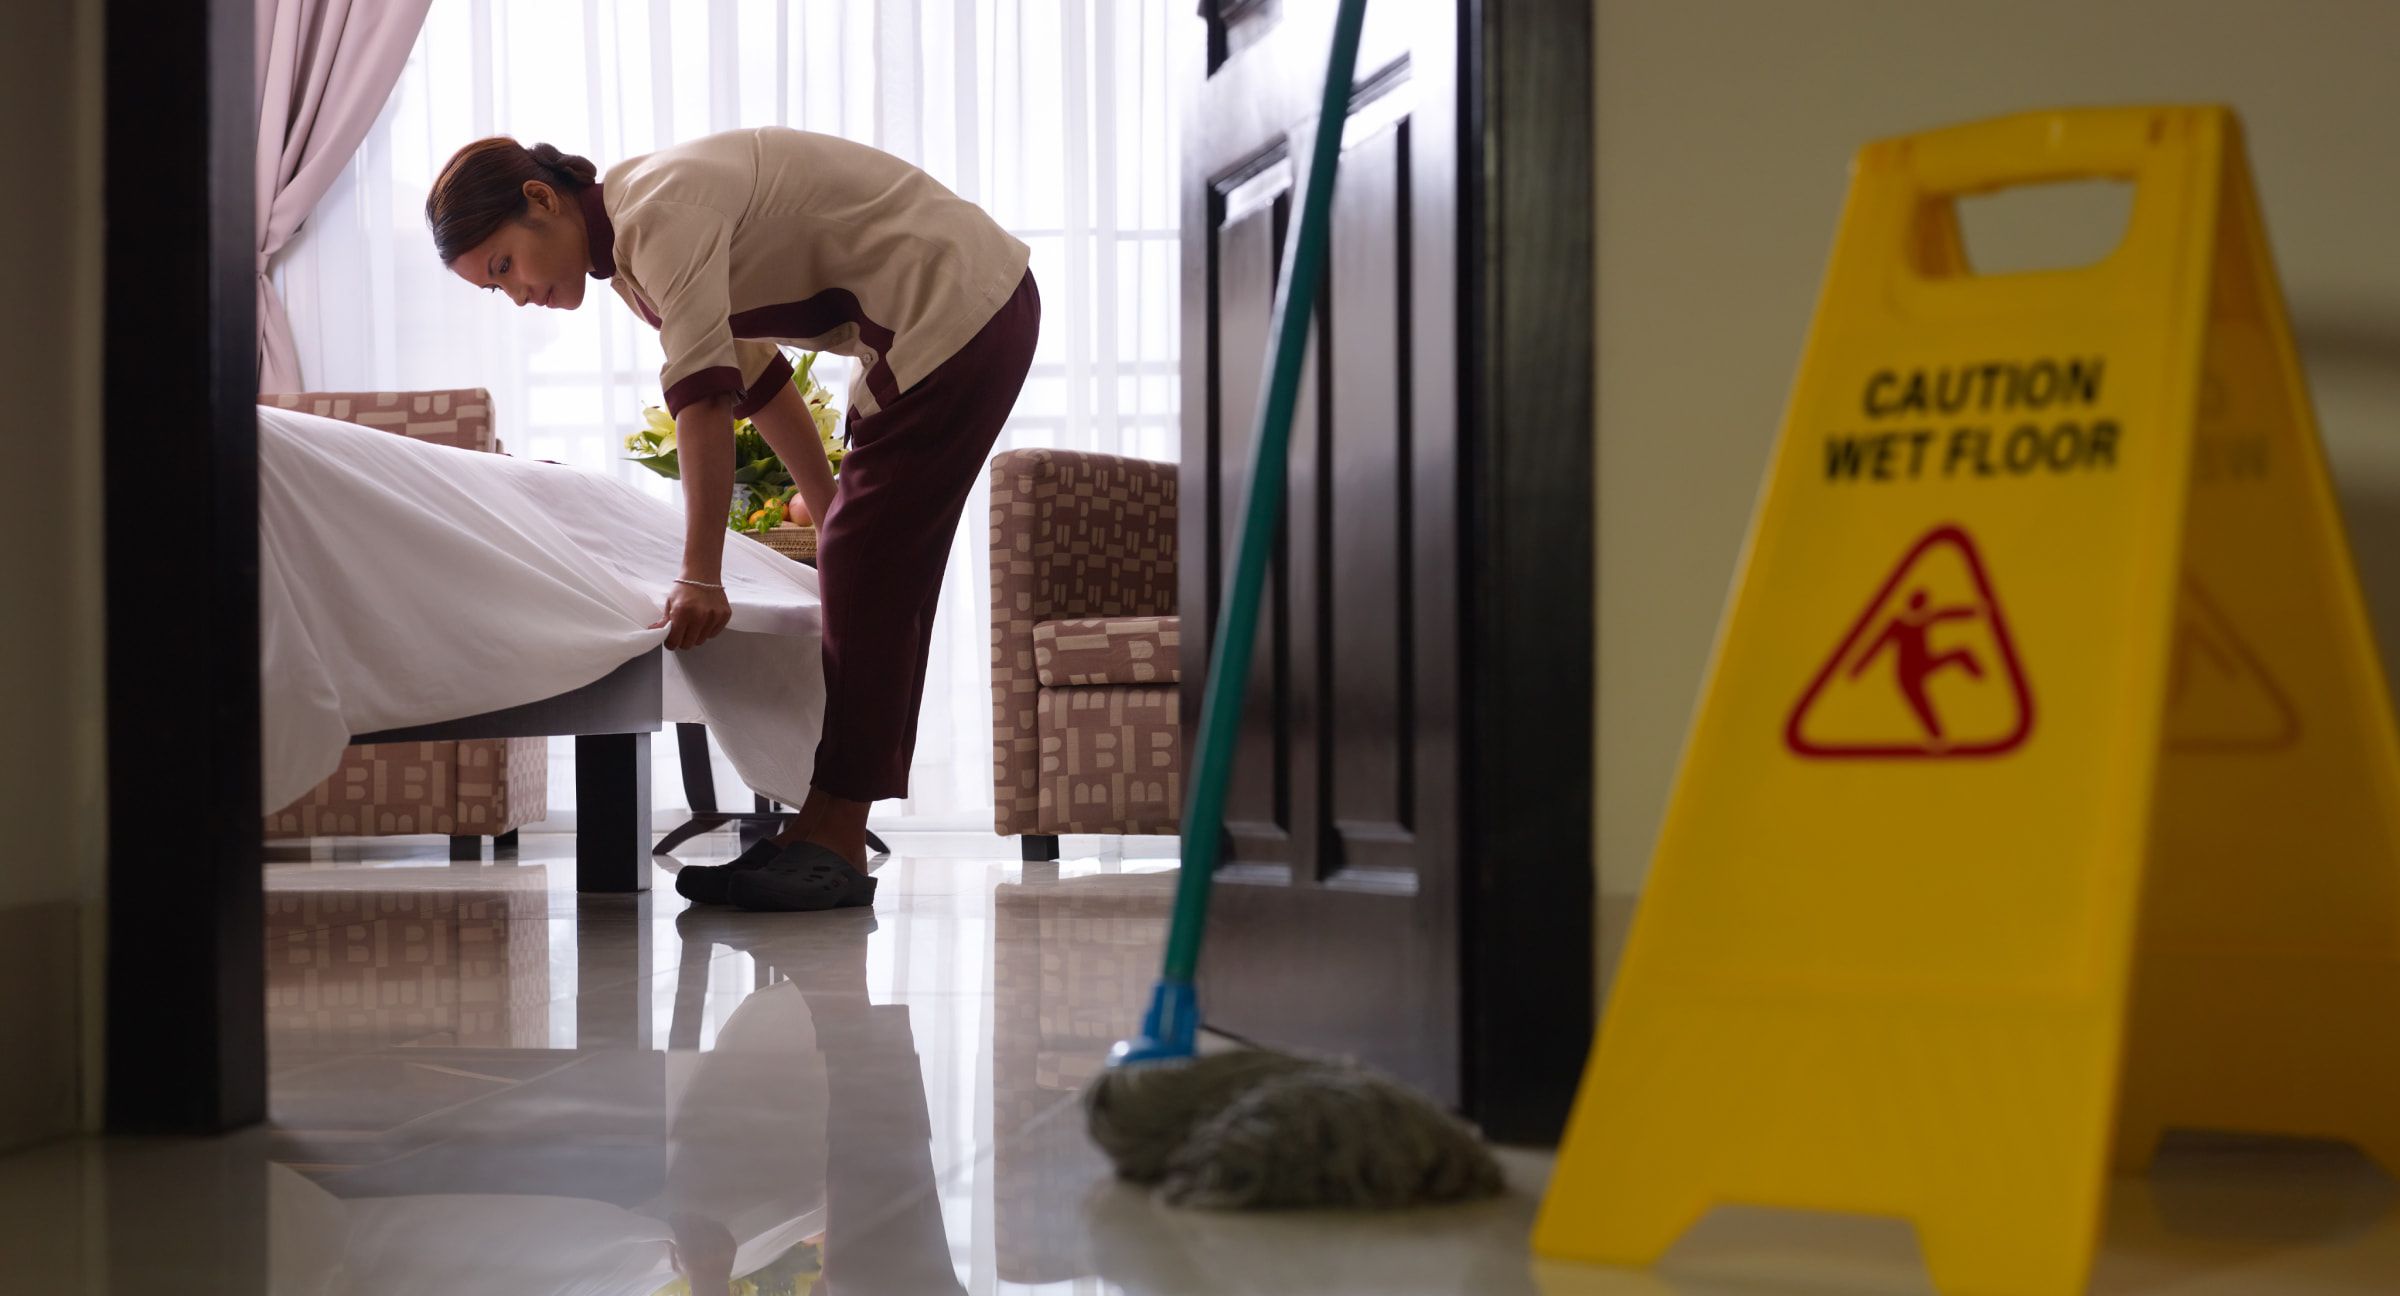 Hotel Disinfecting Made Easy: The Wellness Butler Program